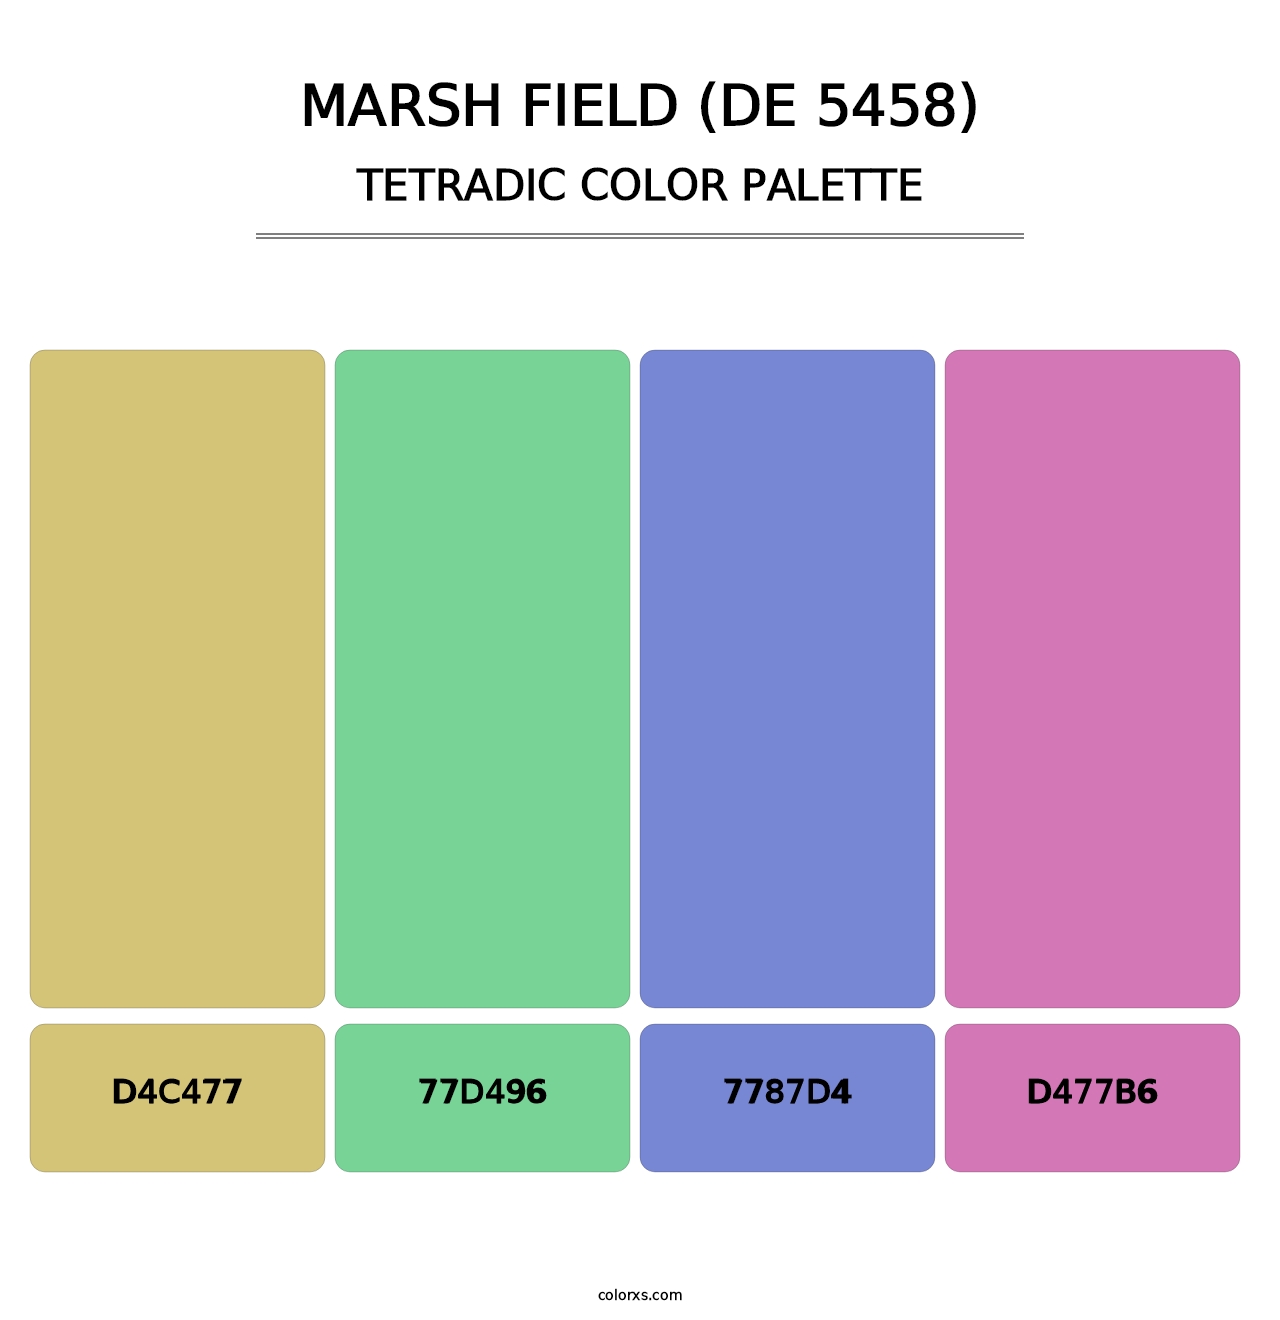 Marsh Field (DE 5458) - Tetradic Color Palette